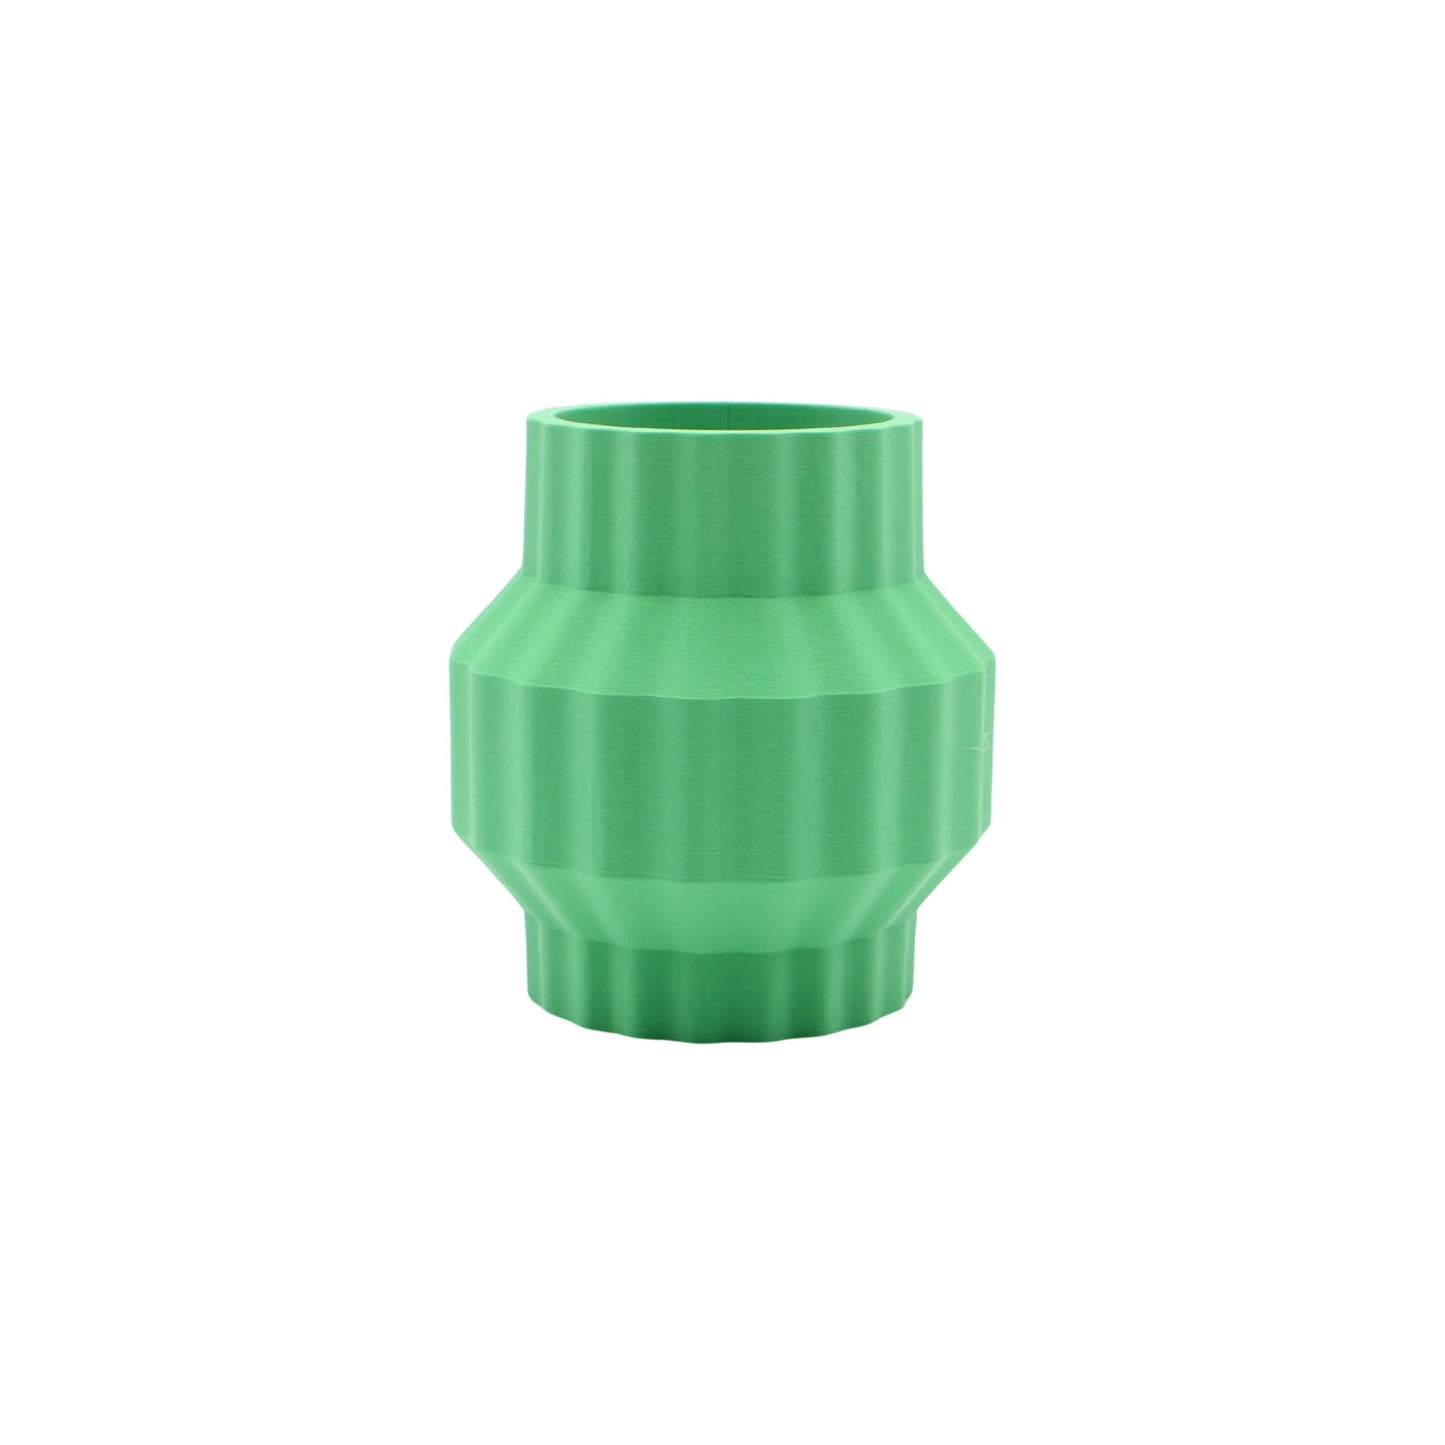 Ferrara design vase green edition